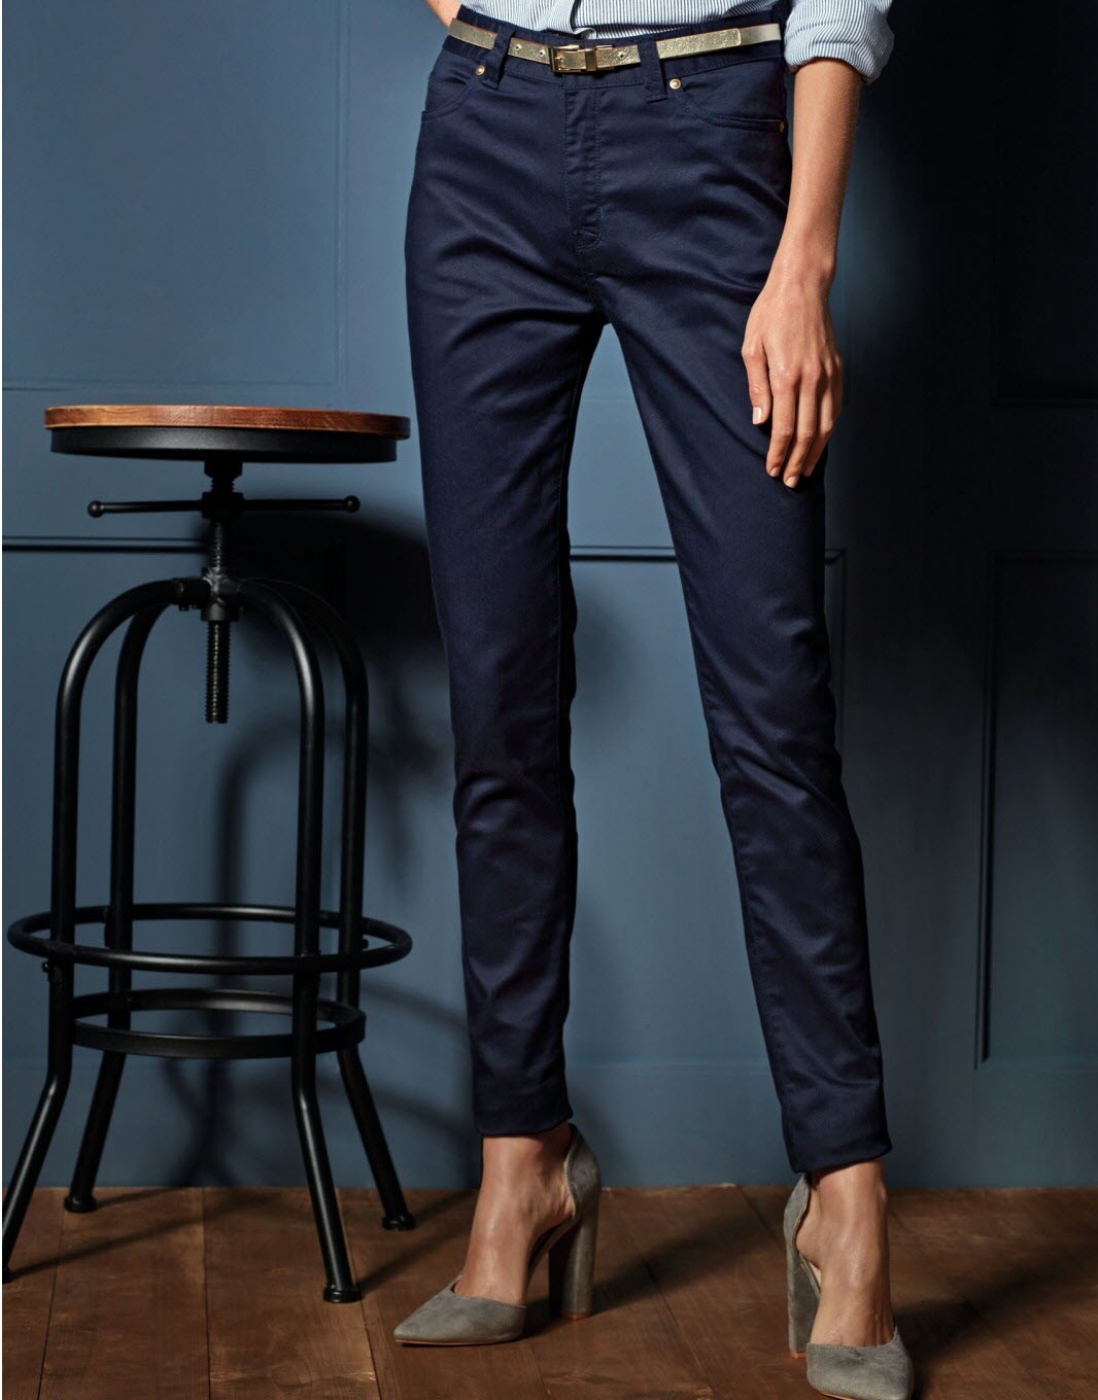 Pantalon ospatar, model chino clasic, tip stretch denim cu 4 buzunare, de dama